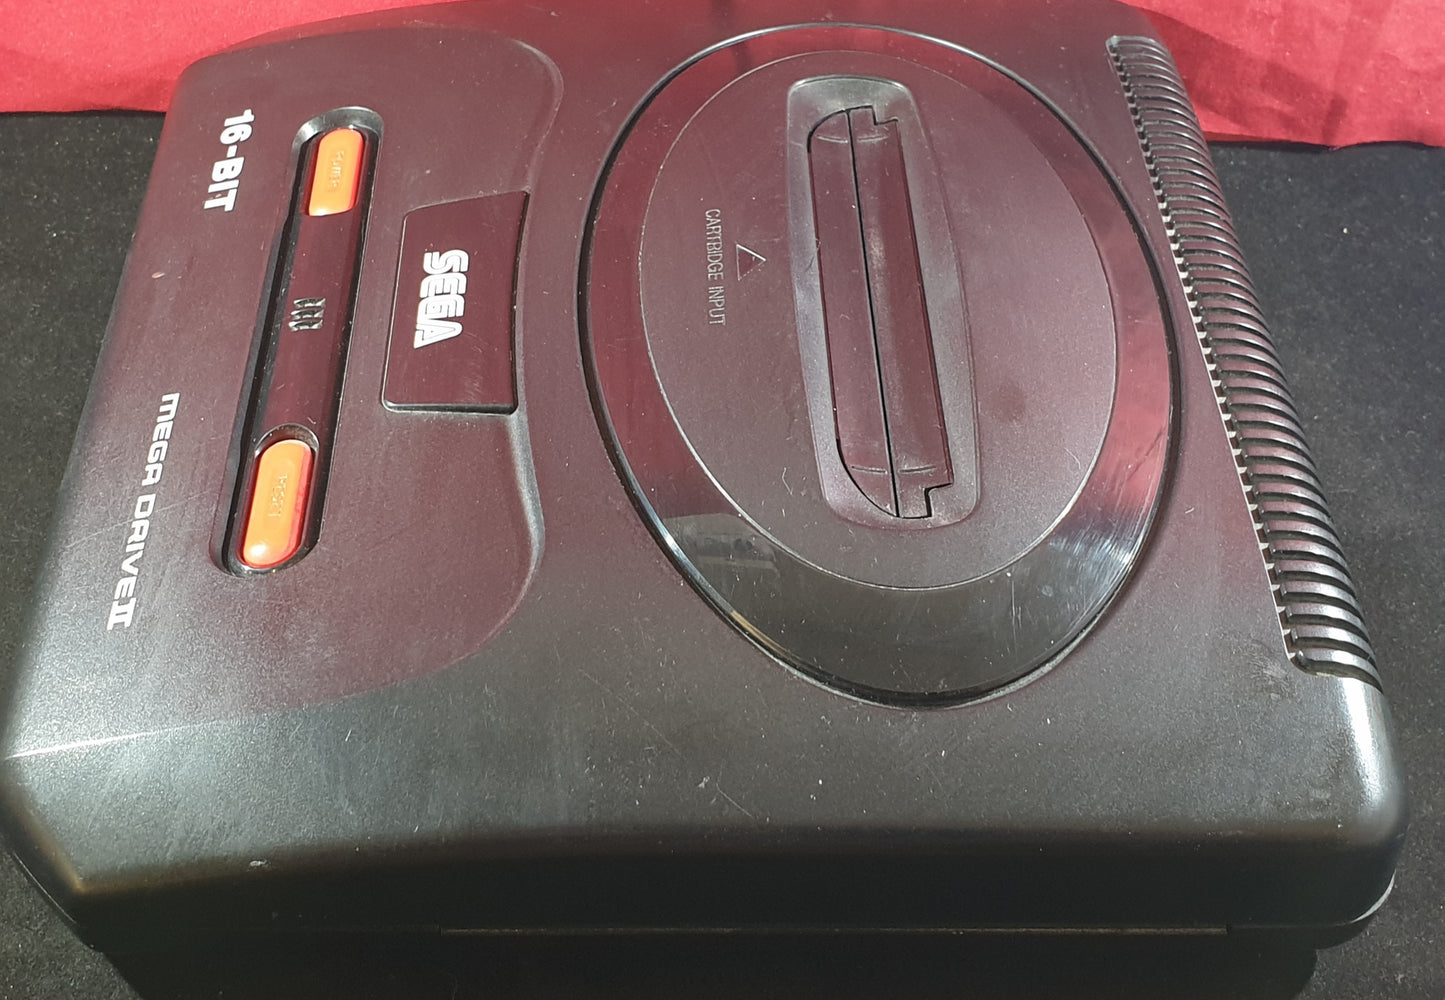 Sega Mega Drive II Console comes with original power adaptor